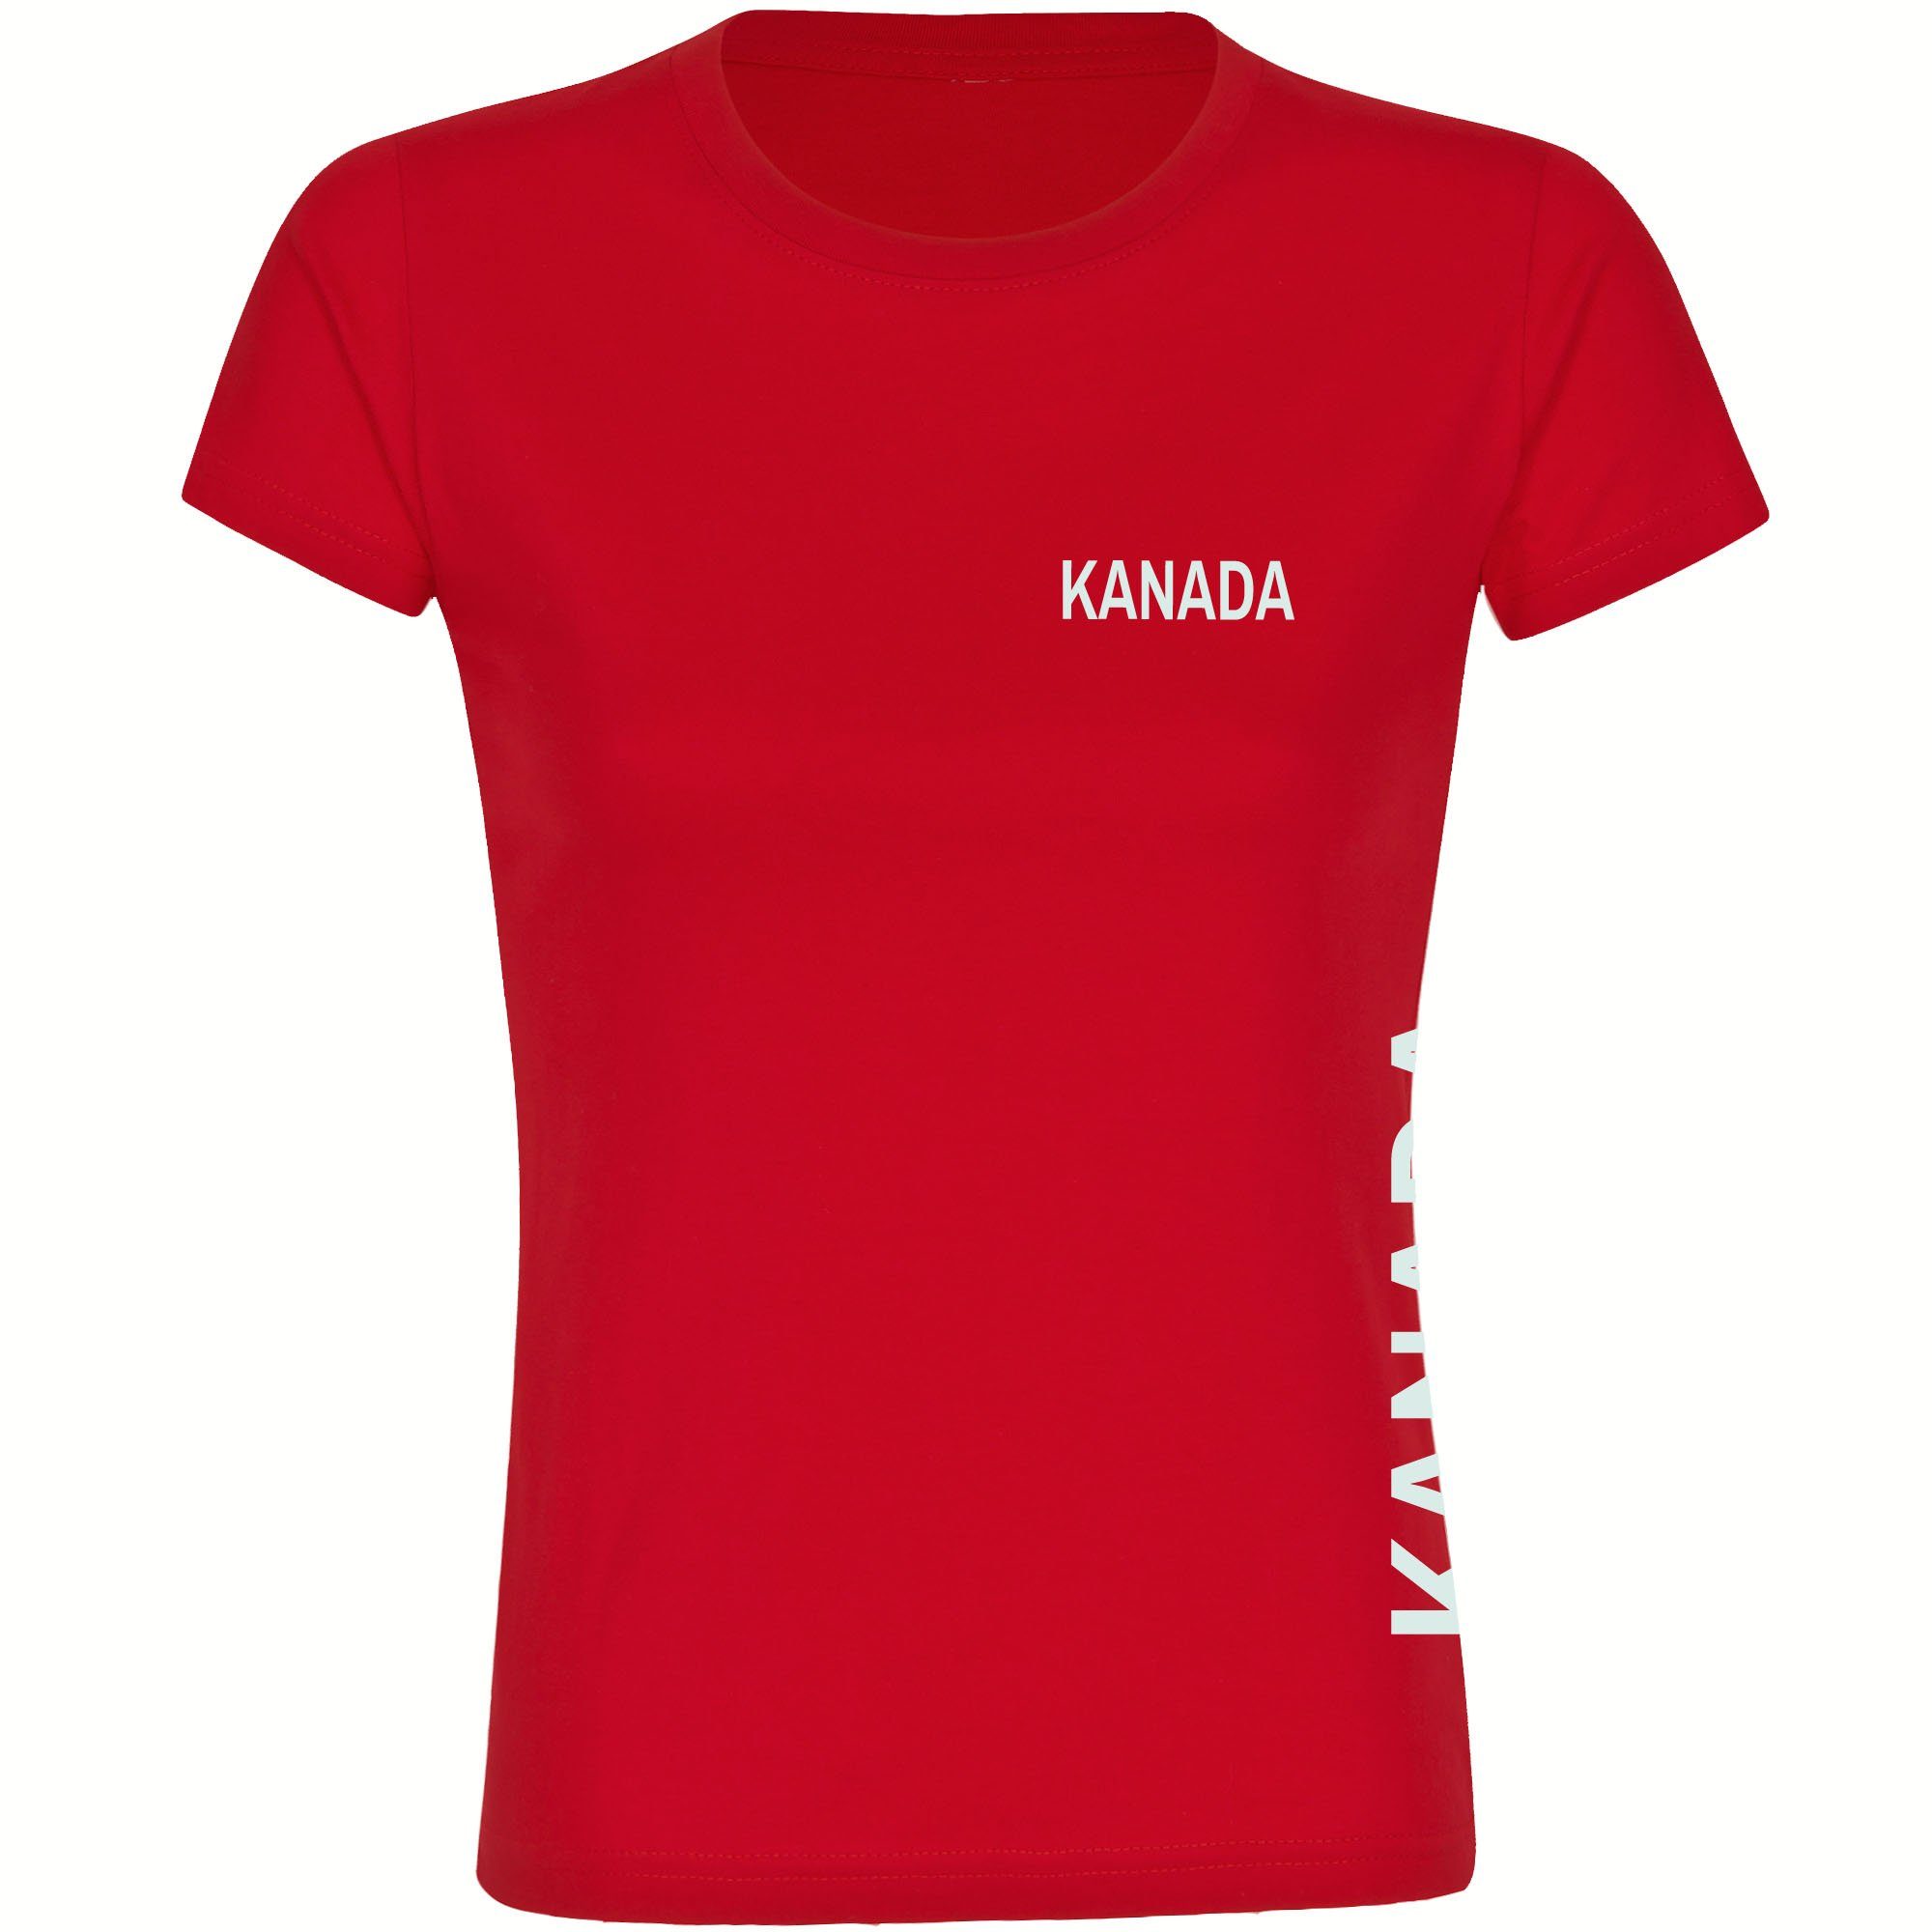 multifanshop T-Shirt Damen Kanada - Brust & Seite - Frauen